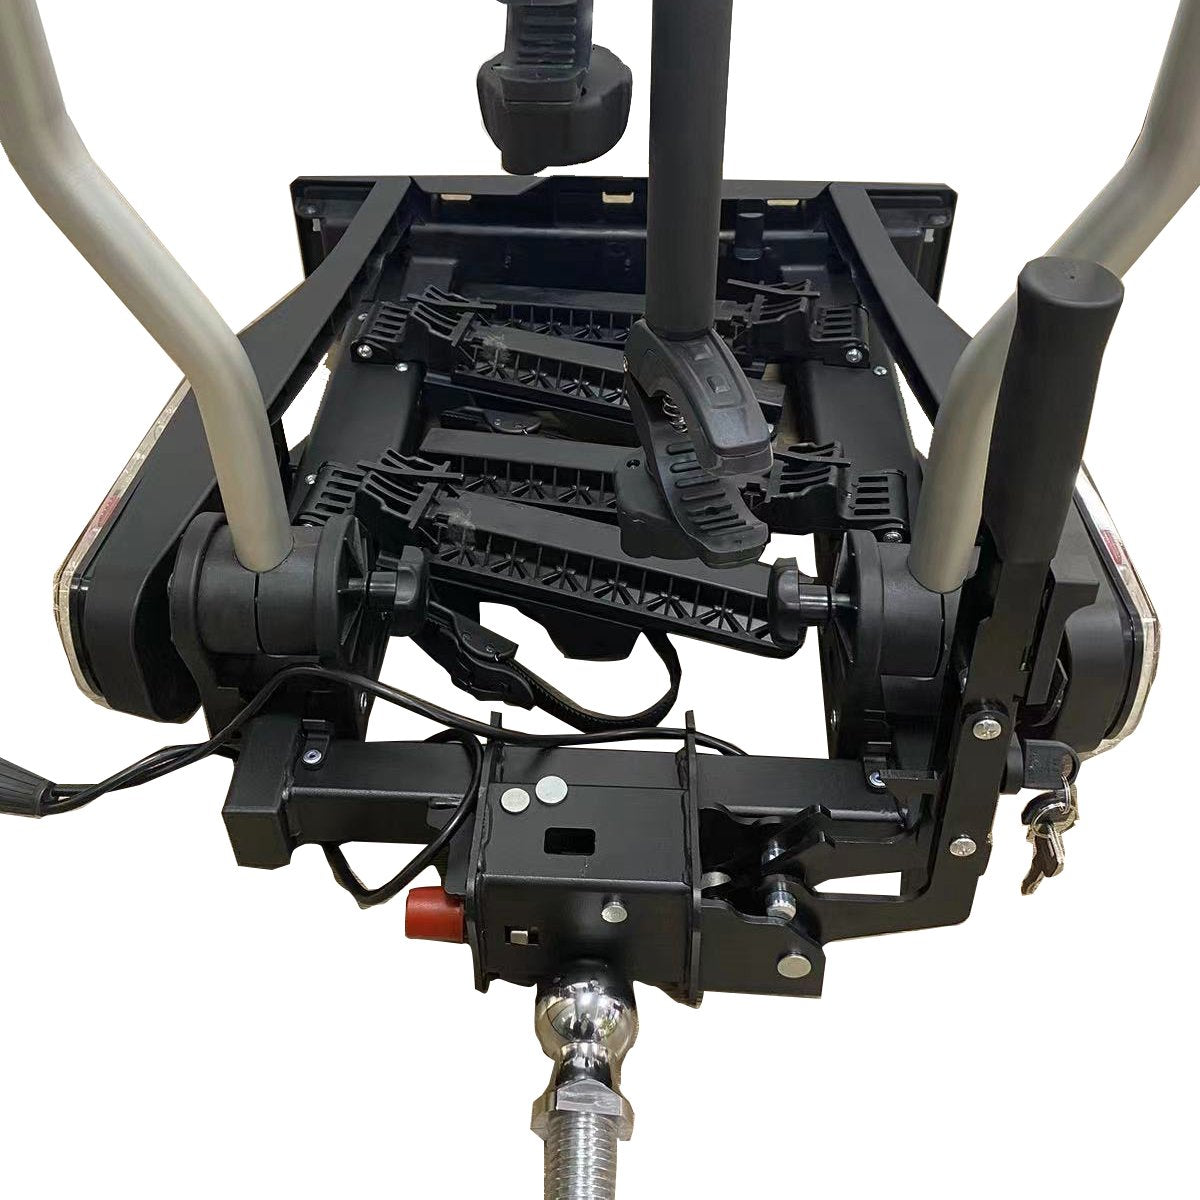 IKURAM 2 Bike Rack Foldable Rack with License Plate Frame, Turn Signal